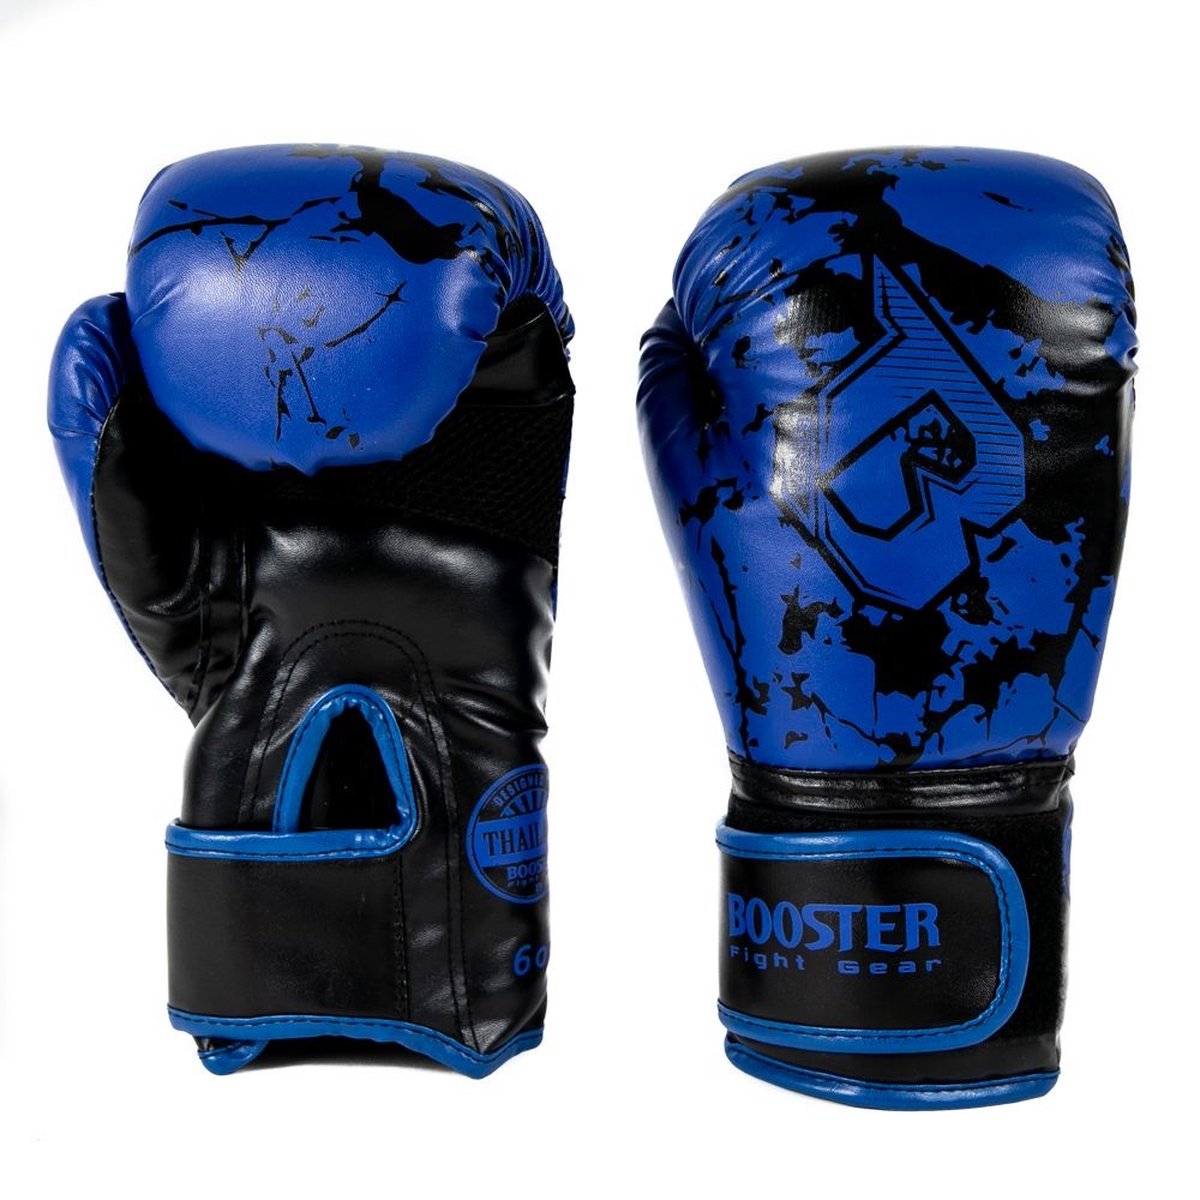 Booster Fightgear - BG Youth Marble Blue - 10 oz